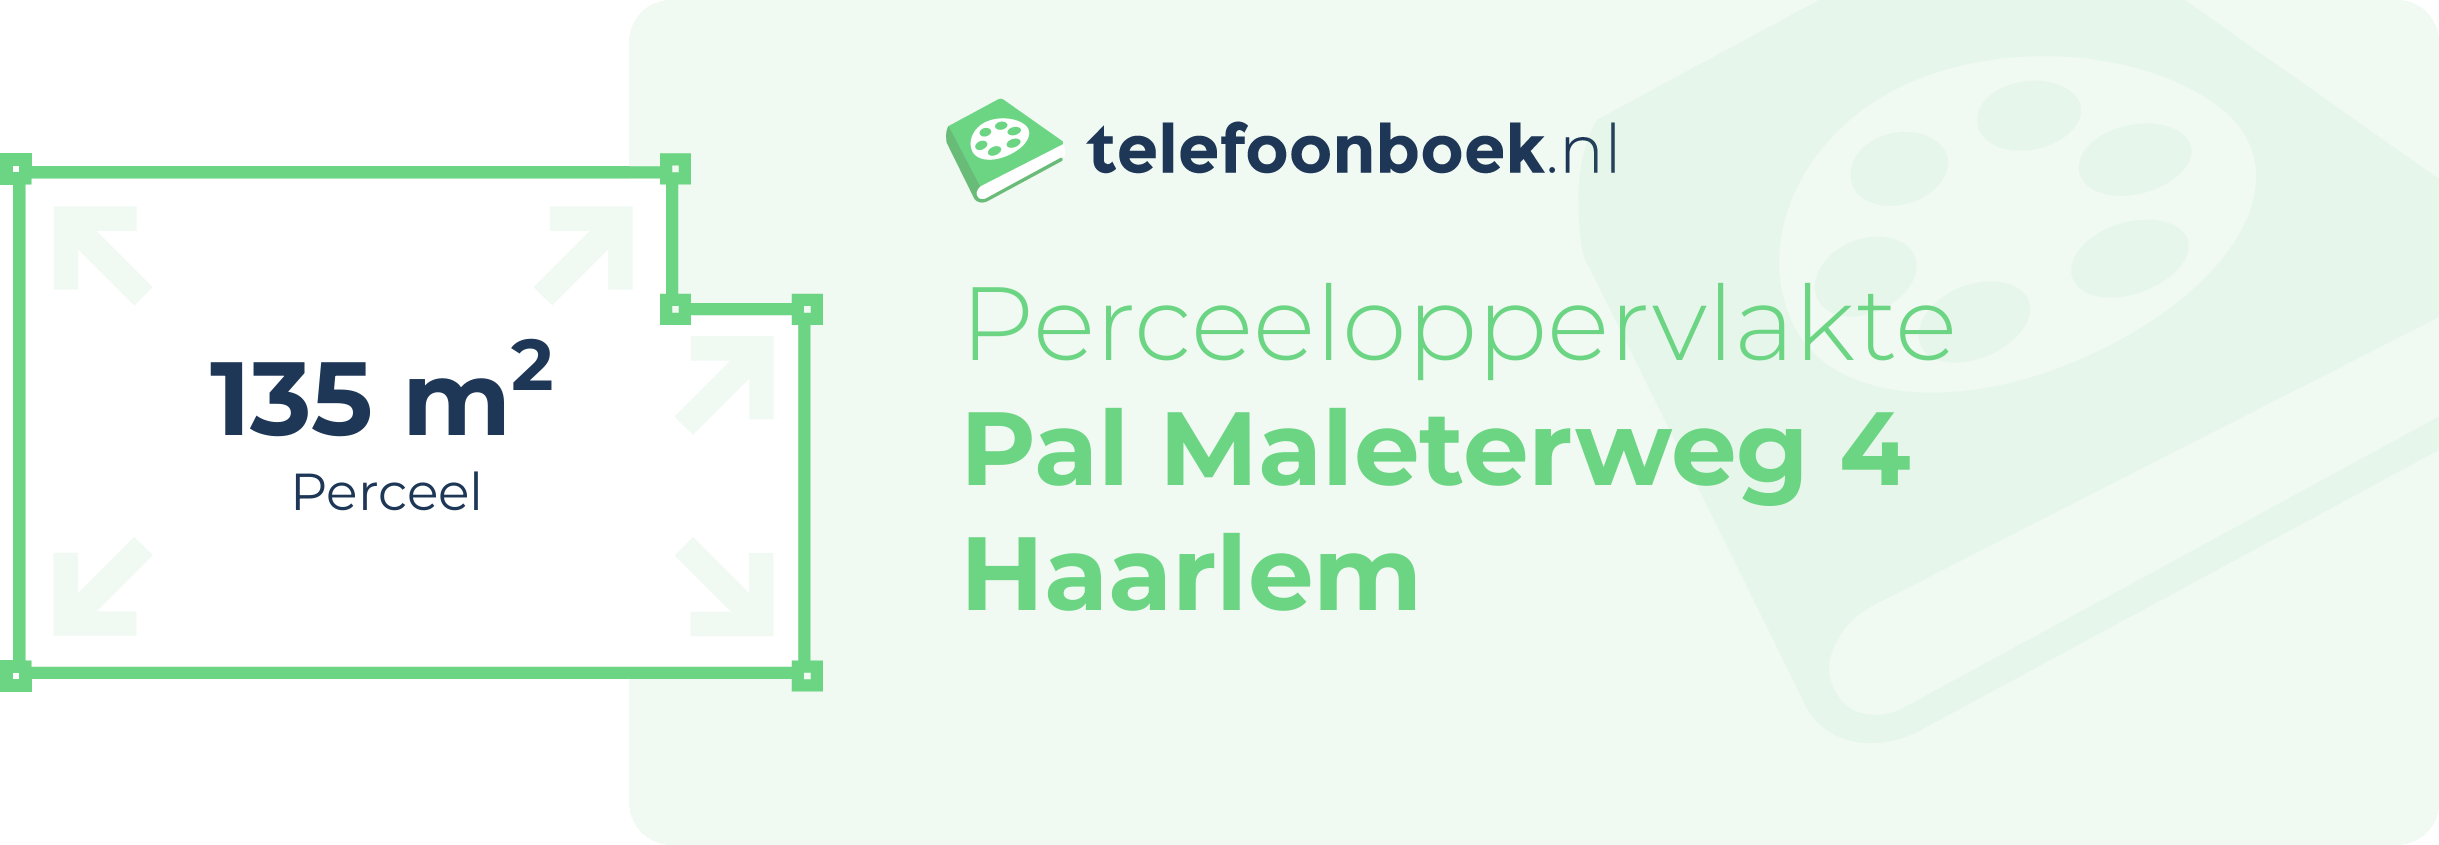 Perceeloppervlakte Pal Maleterweg 4 Haarlem